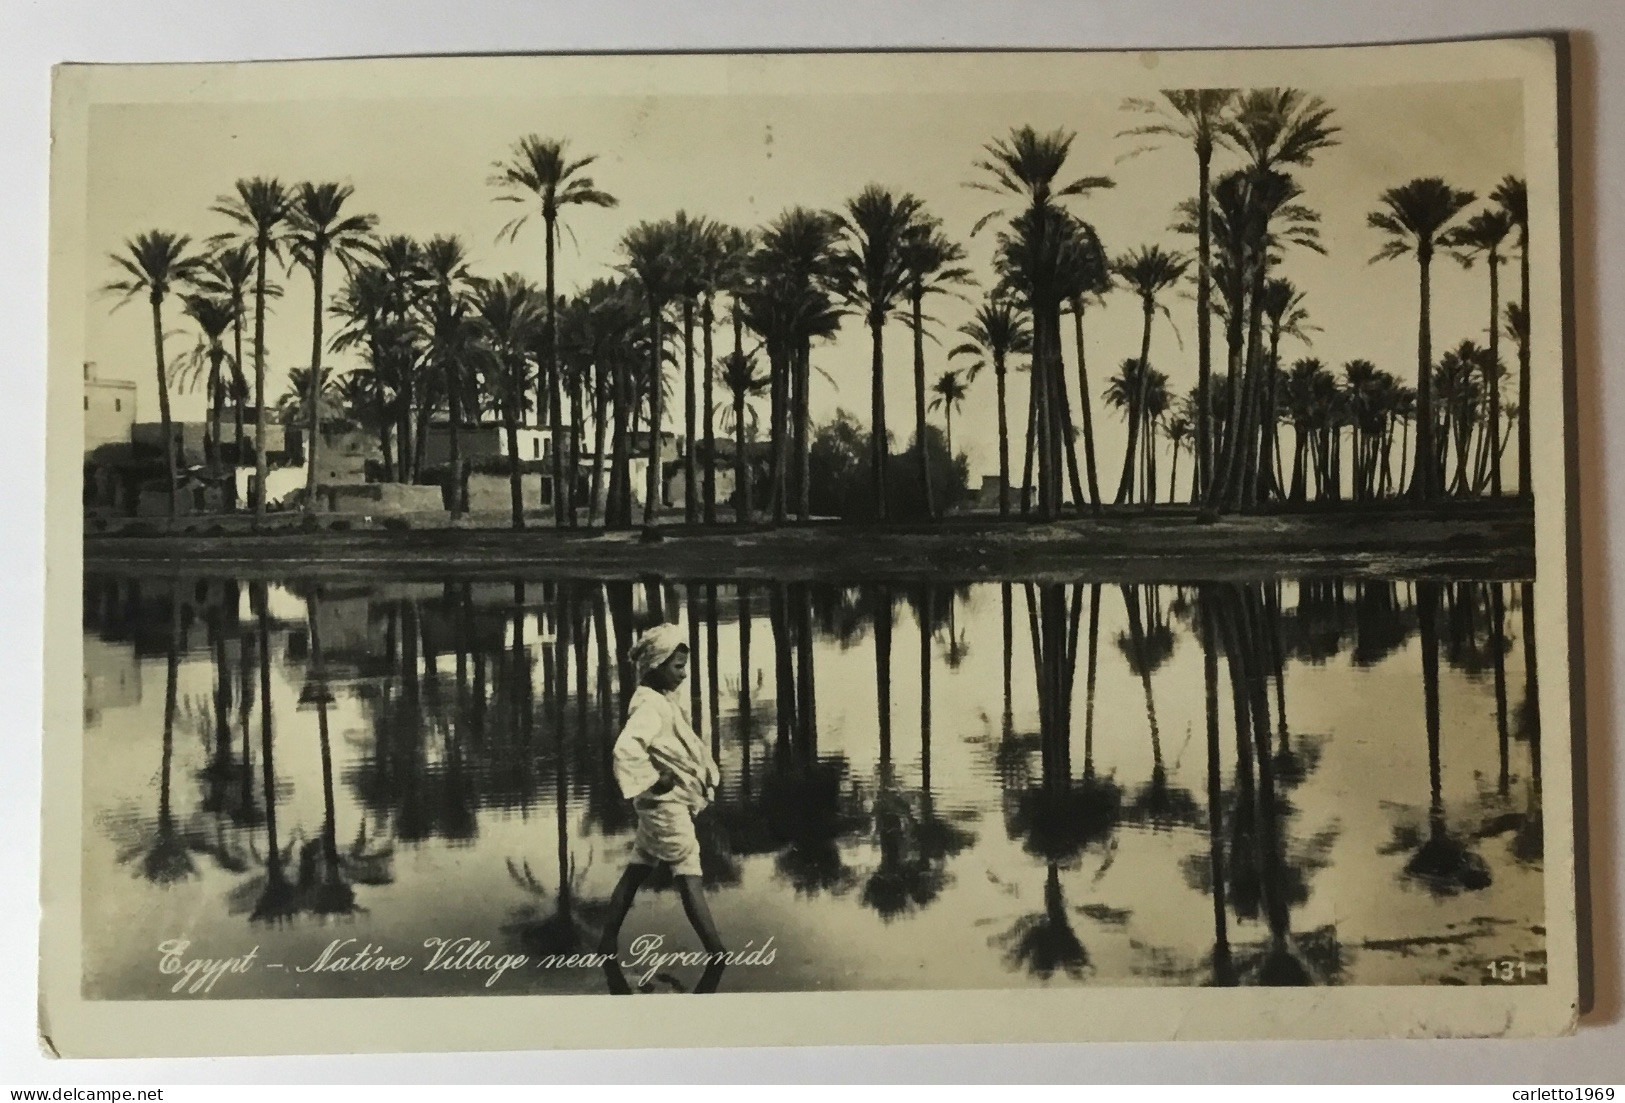 EGYPT - NATIVE VILLAGE NEAR PYRAMIDS FOTOGRAFICA 1939 VIAGGIATA FP - Cairo